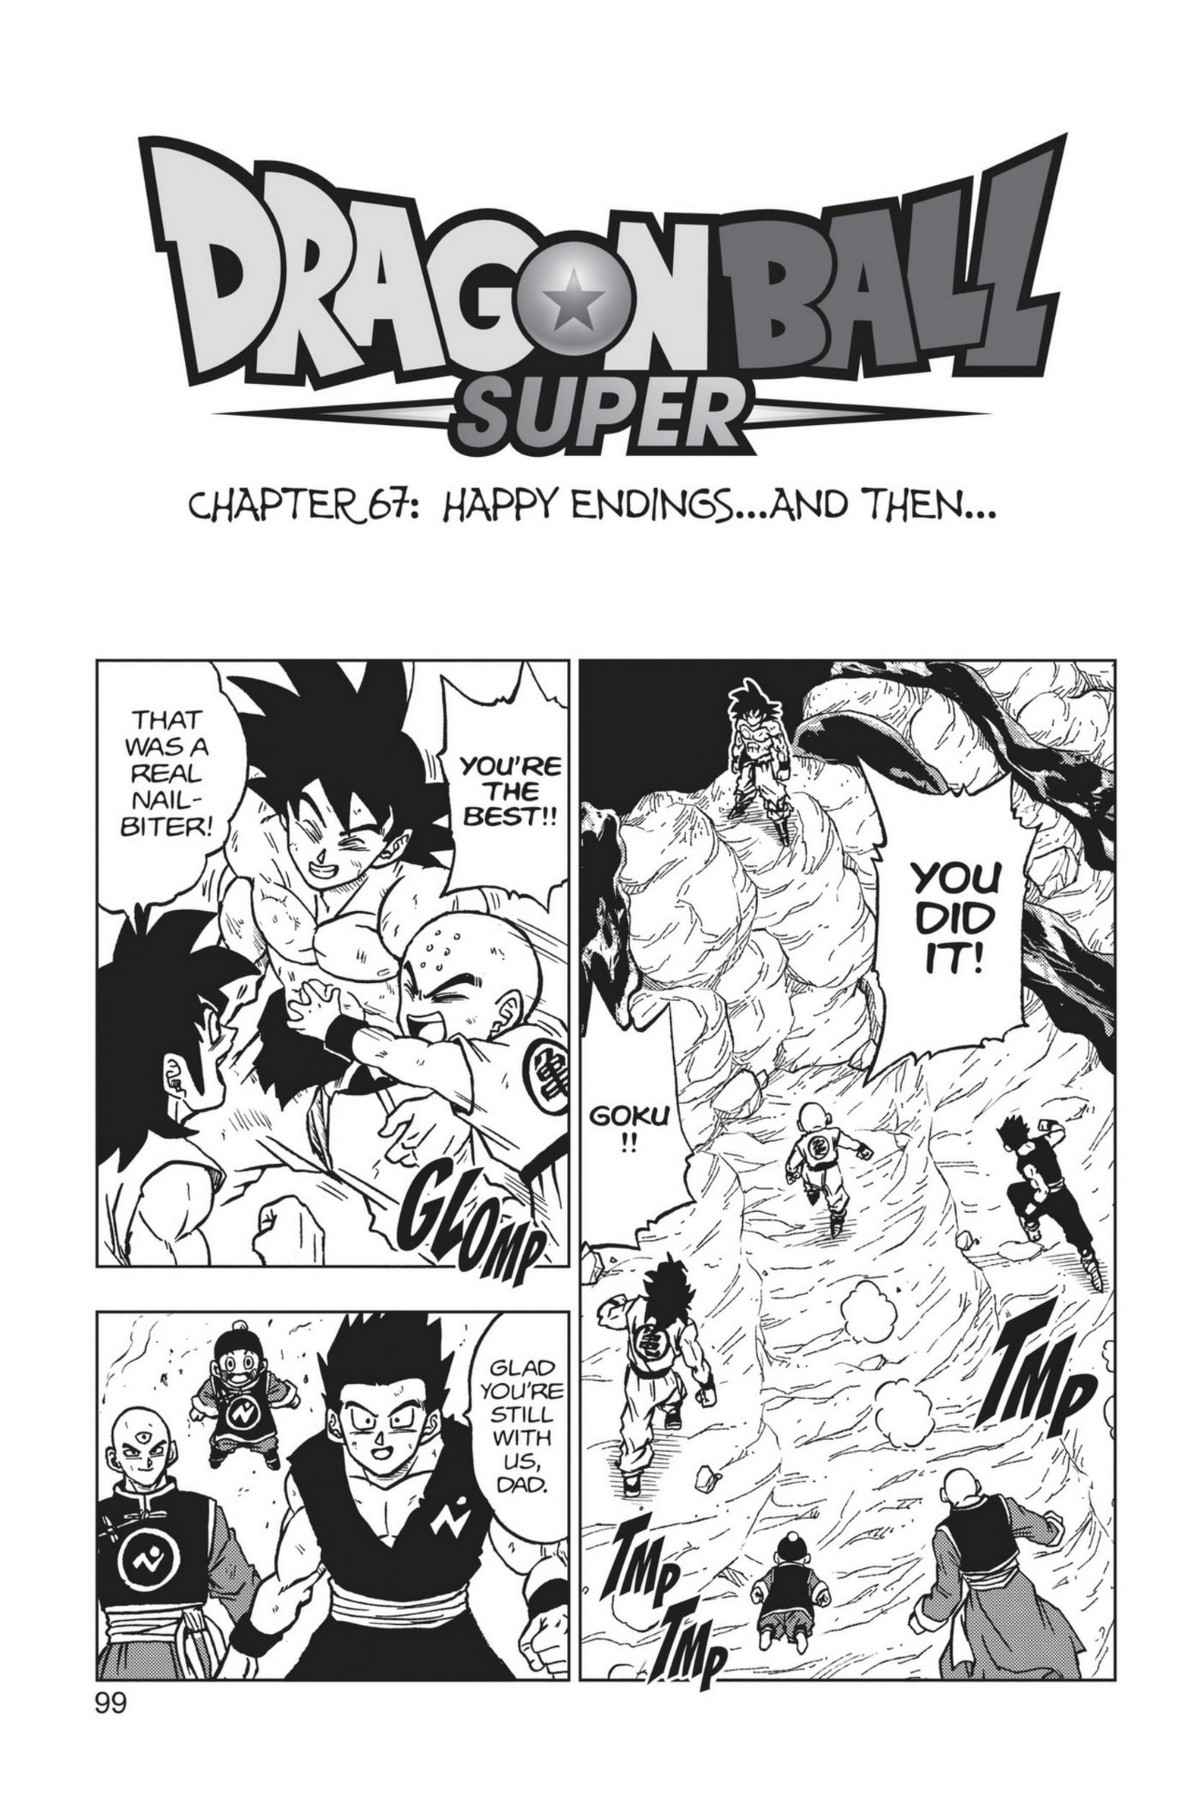 Broly Returns! Dragon Ball Super Manga Chapter 92 Spoilers! 